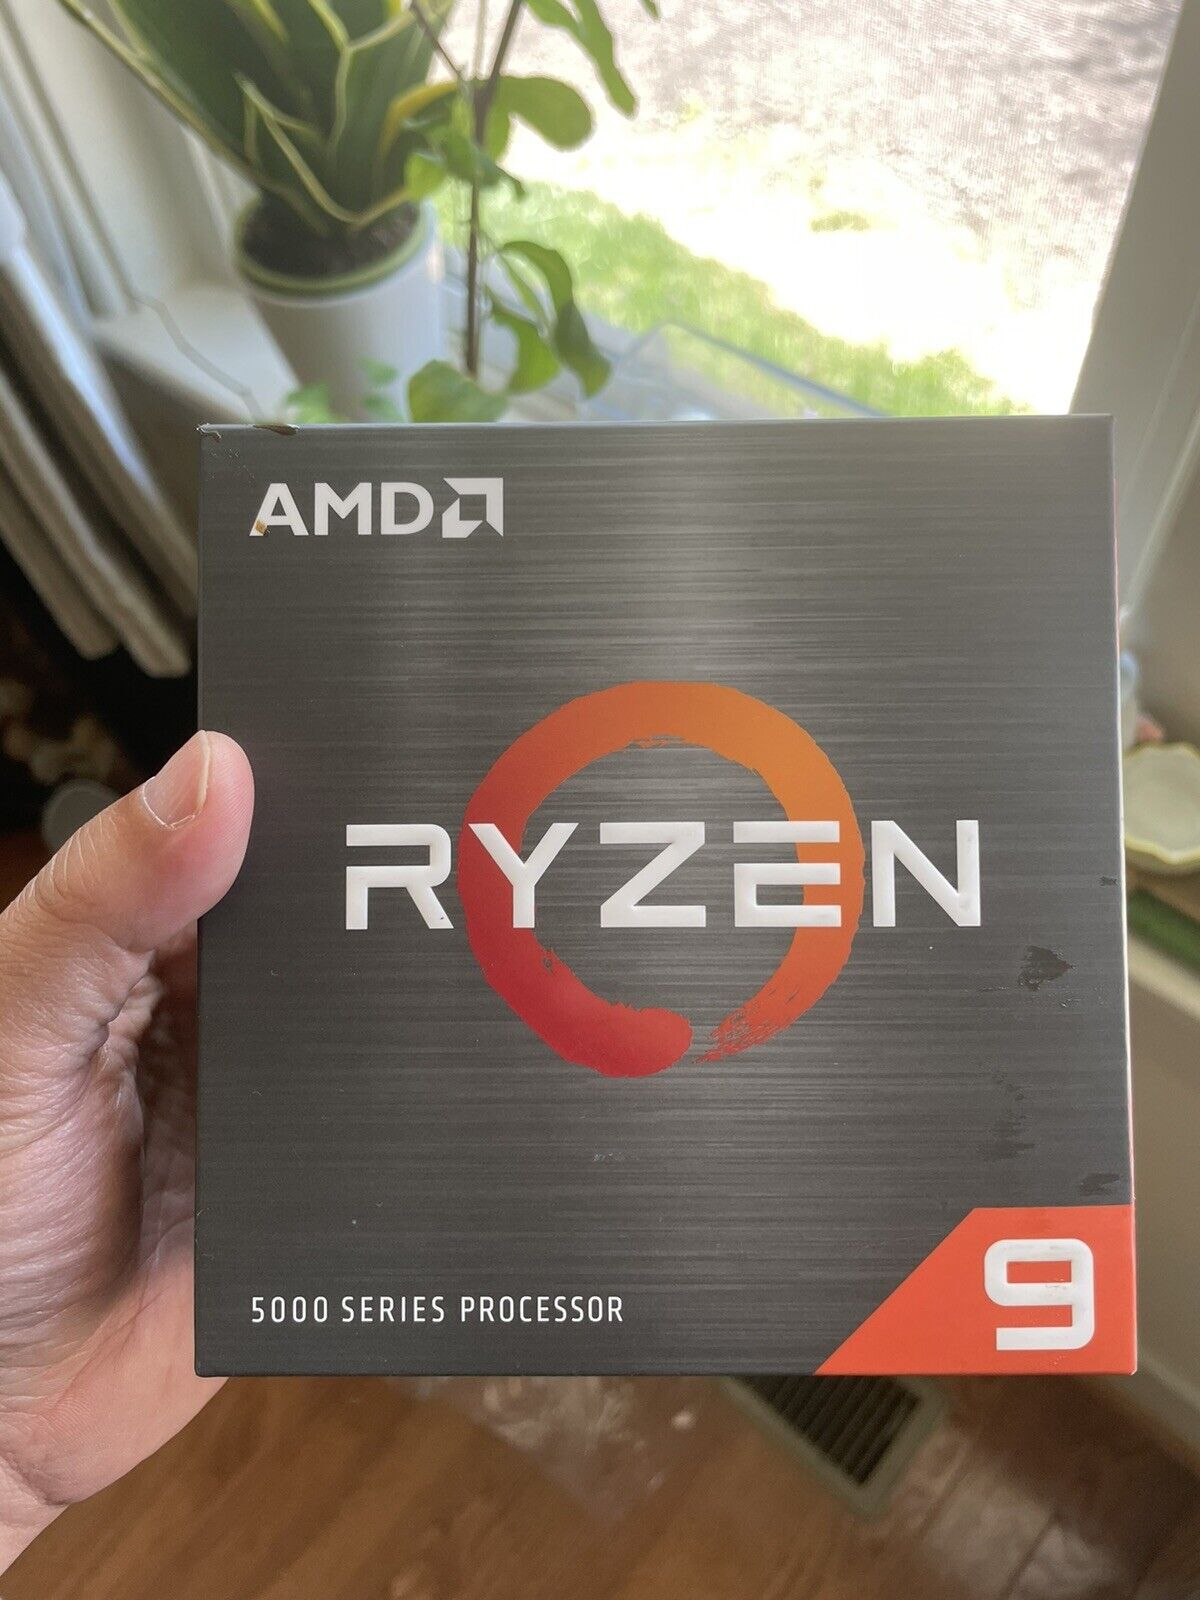 AMD Ryzen 9 5900X Desktop Processor (4.8GHz, 12 Cores, Socket AM4) Box -...